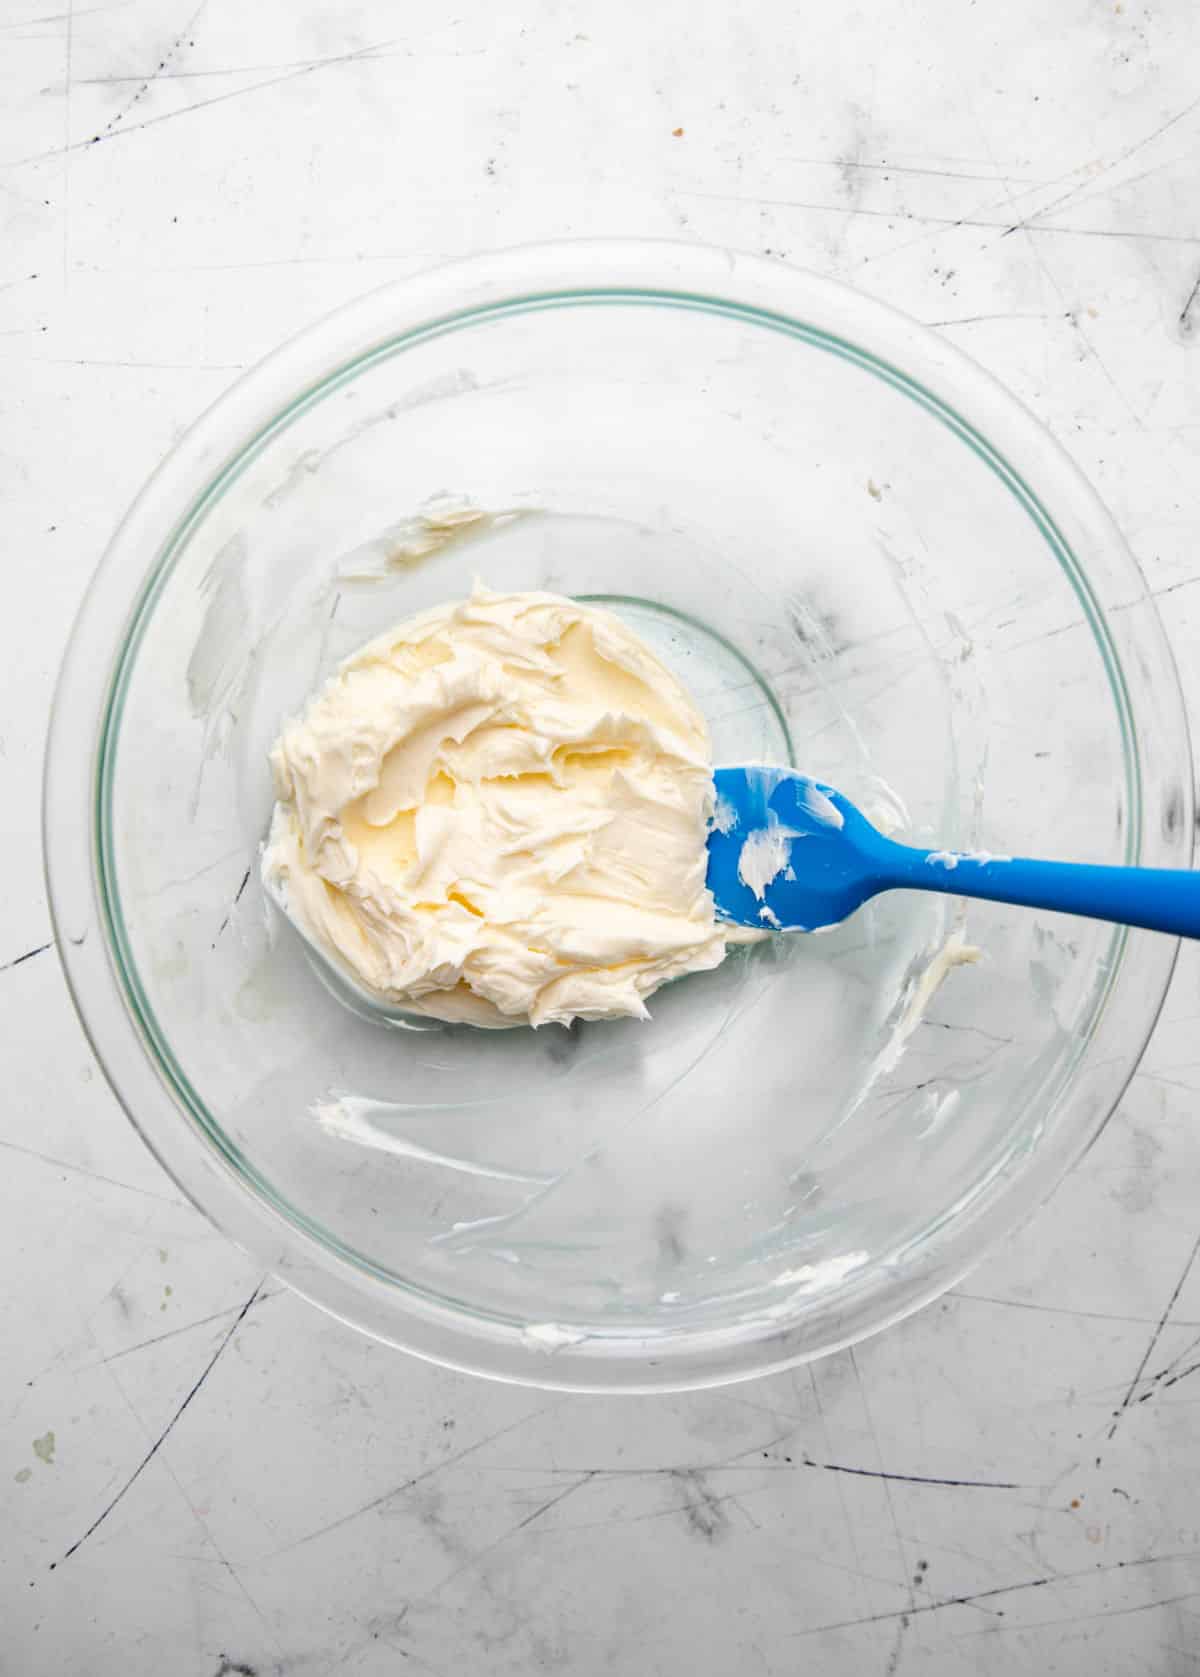 Beaten butter in a glass mixing bowl. 